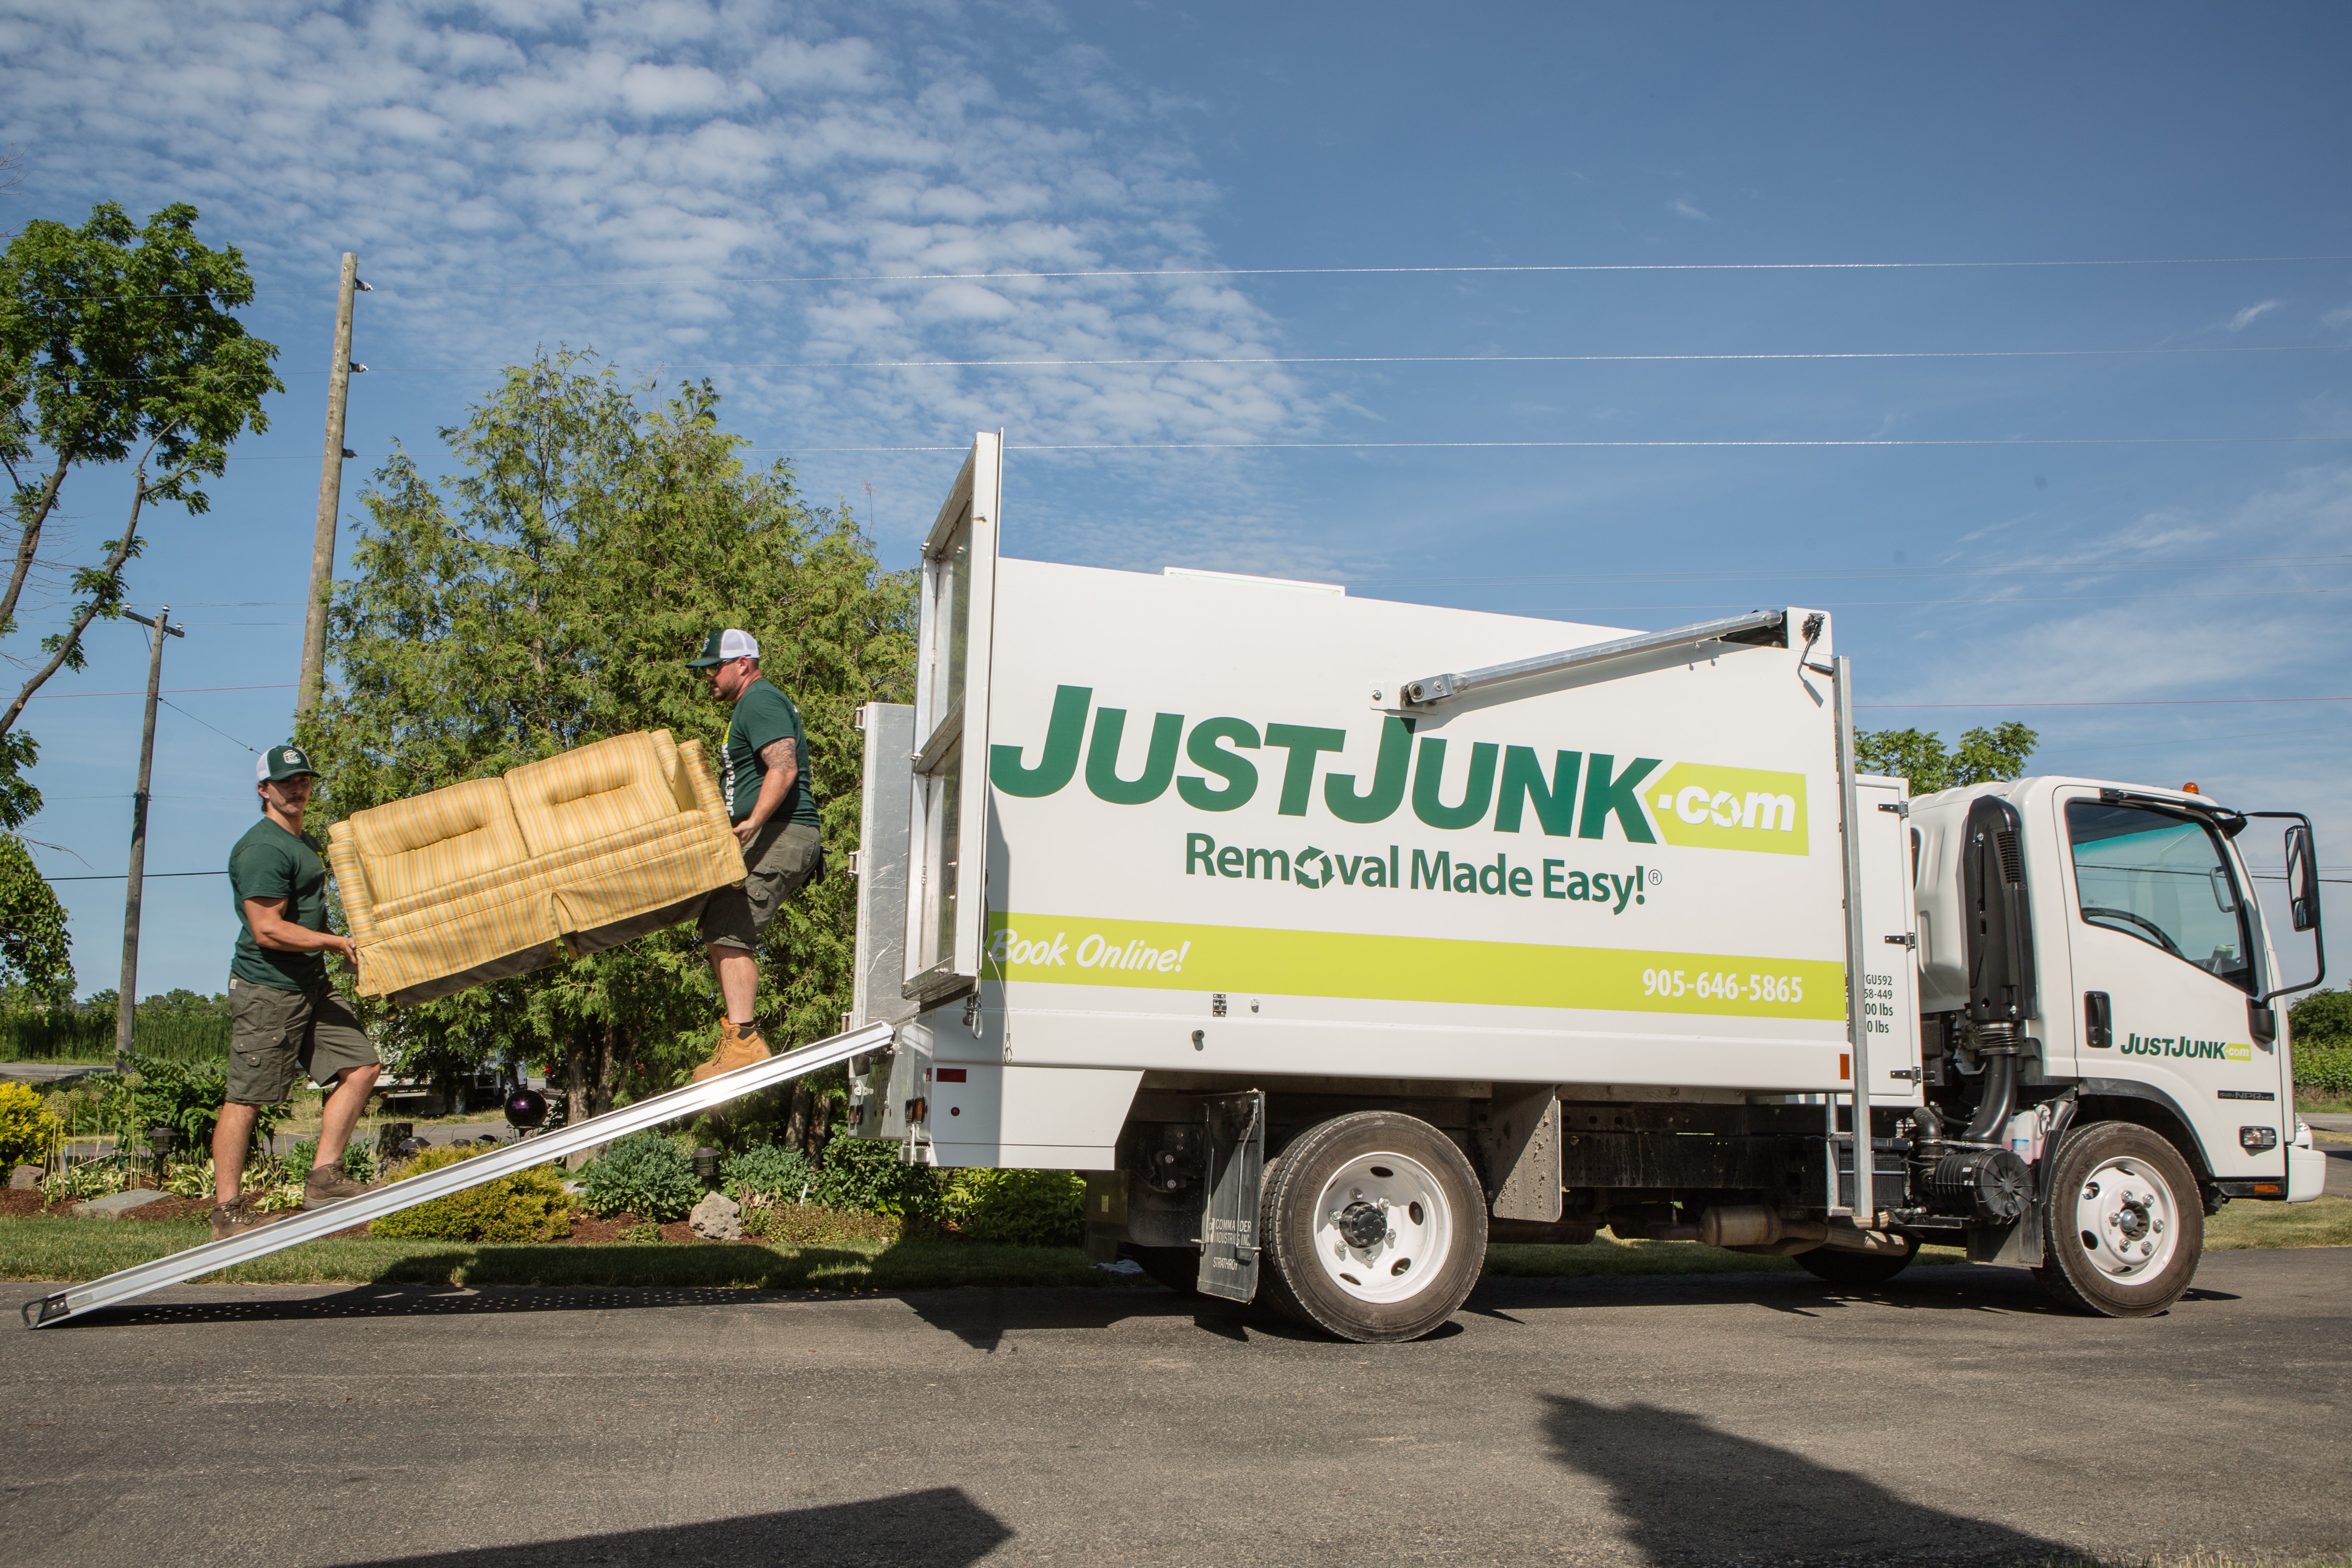 JUSTJUNK - Junk Removal Vancouver